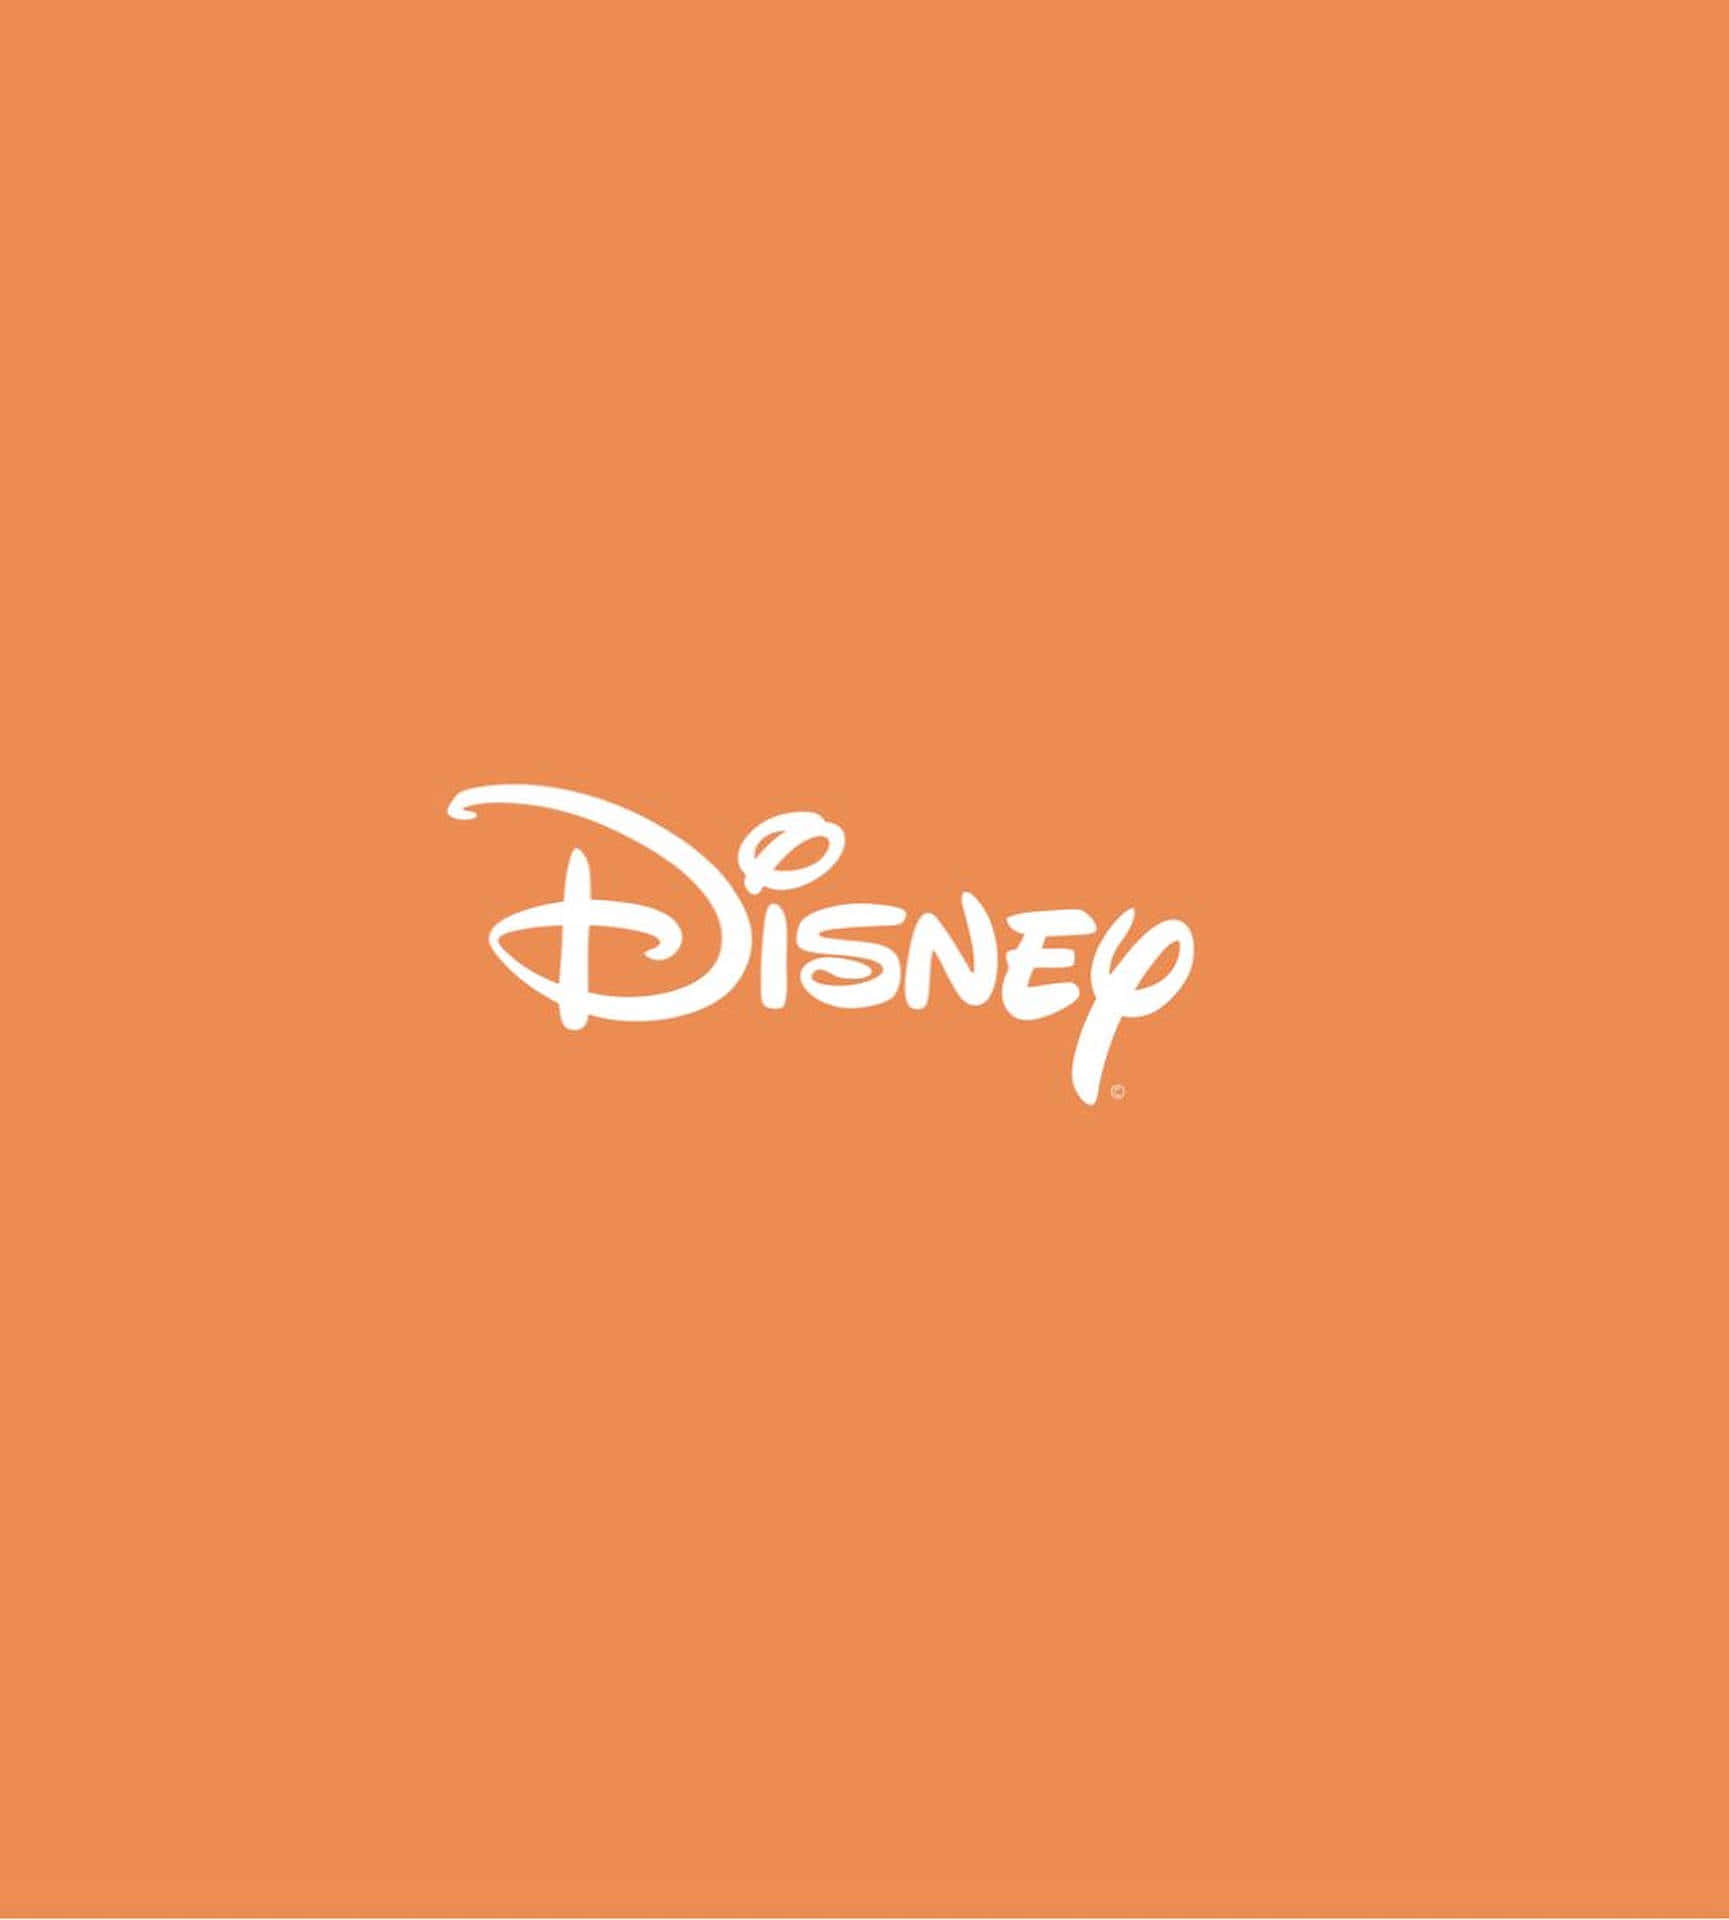 Disney Logo On An Orange Background Wallpaper